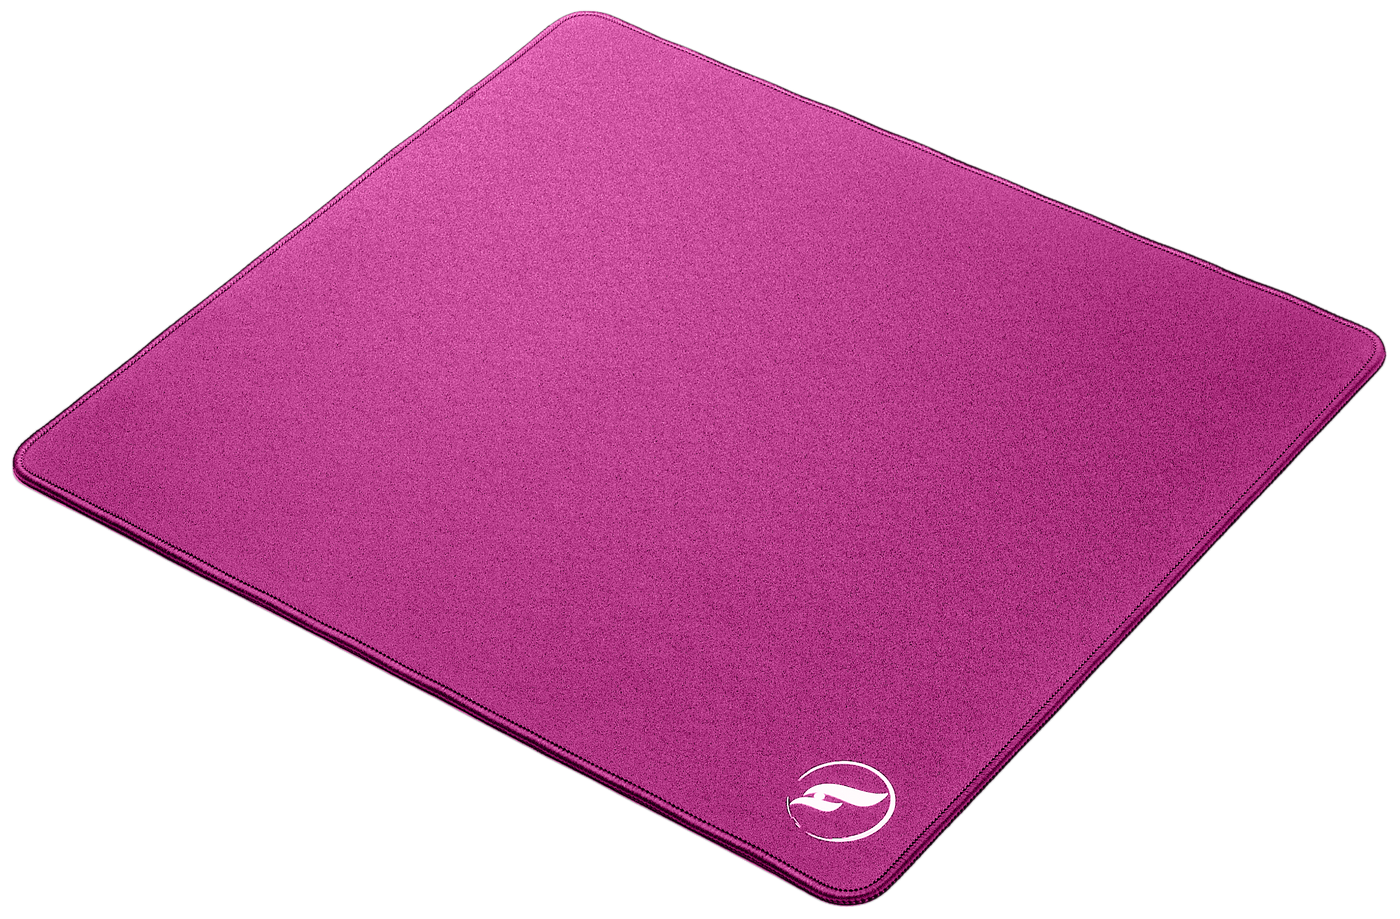 Infinity Pink hybrid gaming pad Odin Gaming